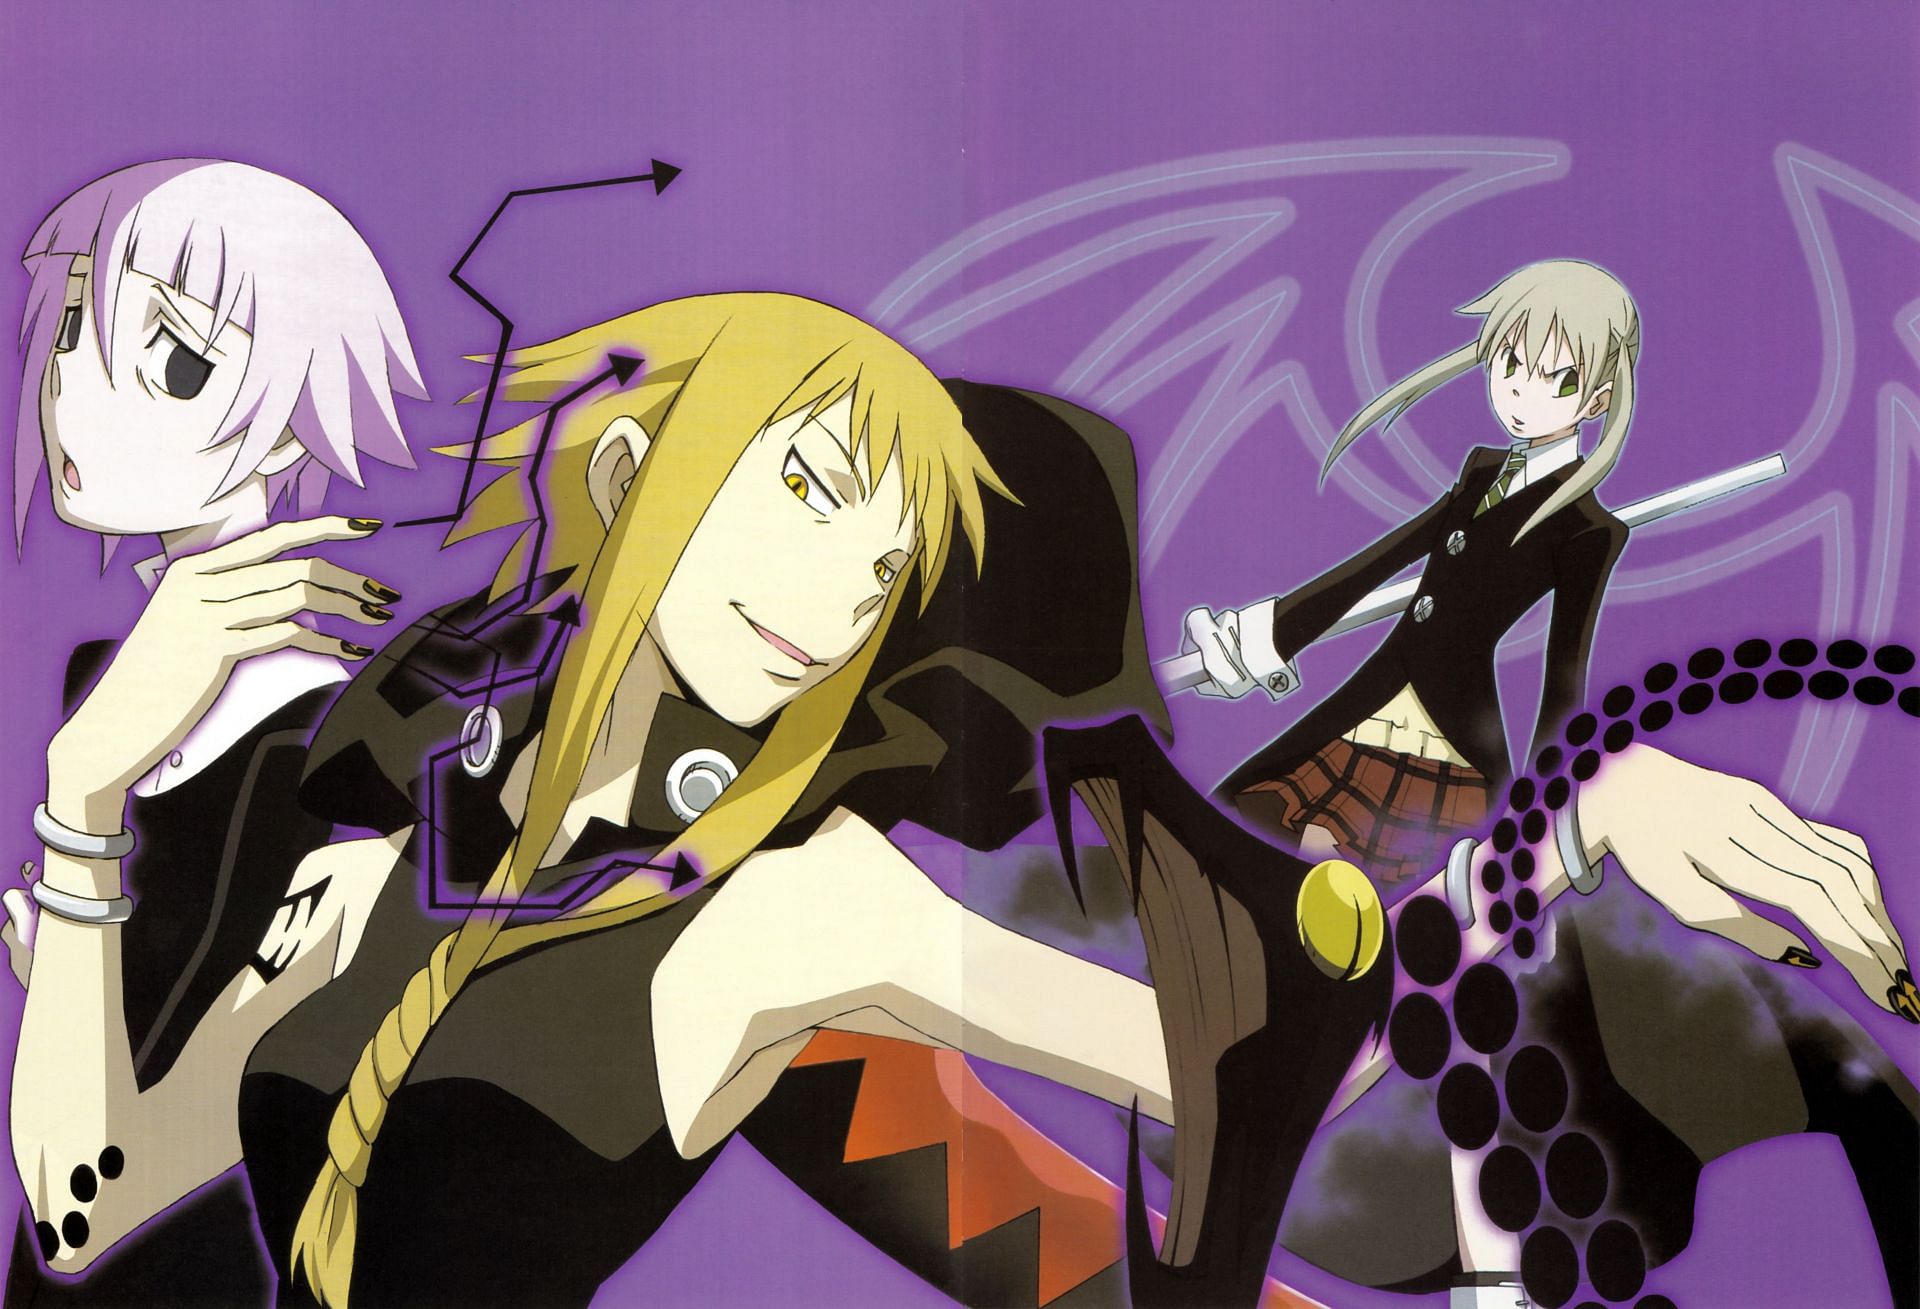 Medusa (center), Crona (left), and Maka (right) (Image via Square Enix)